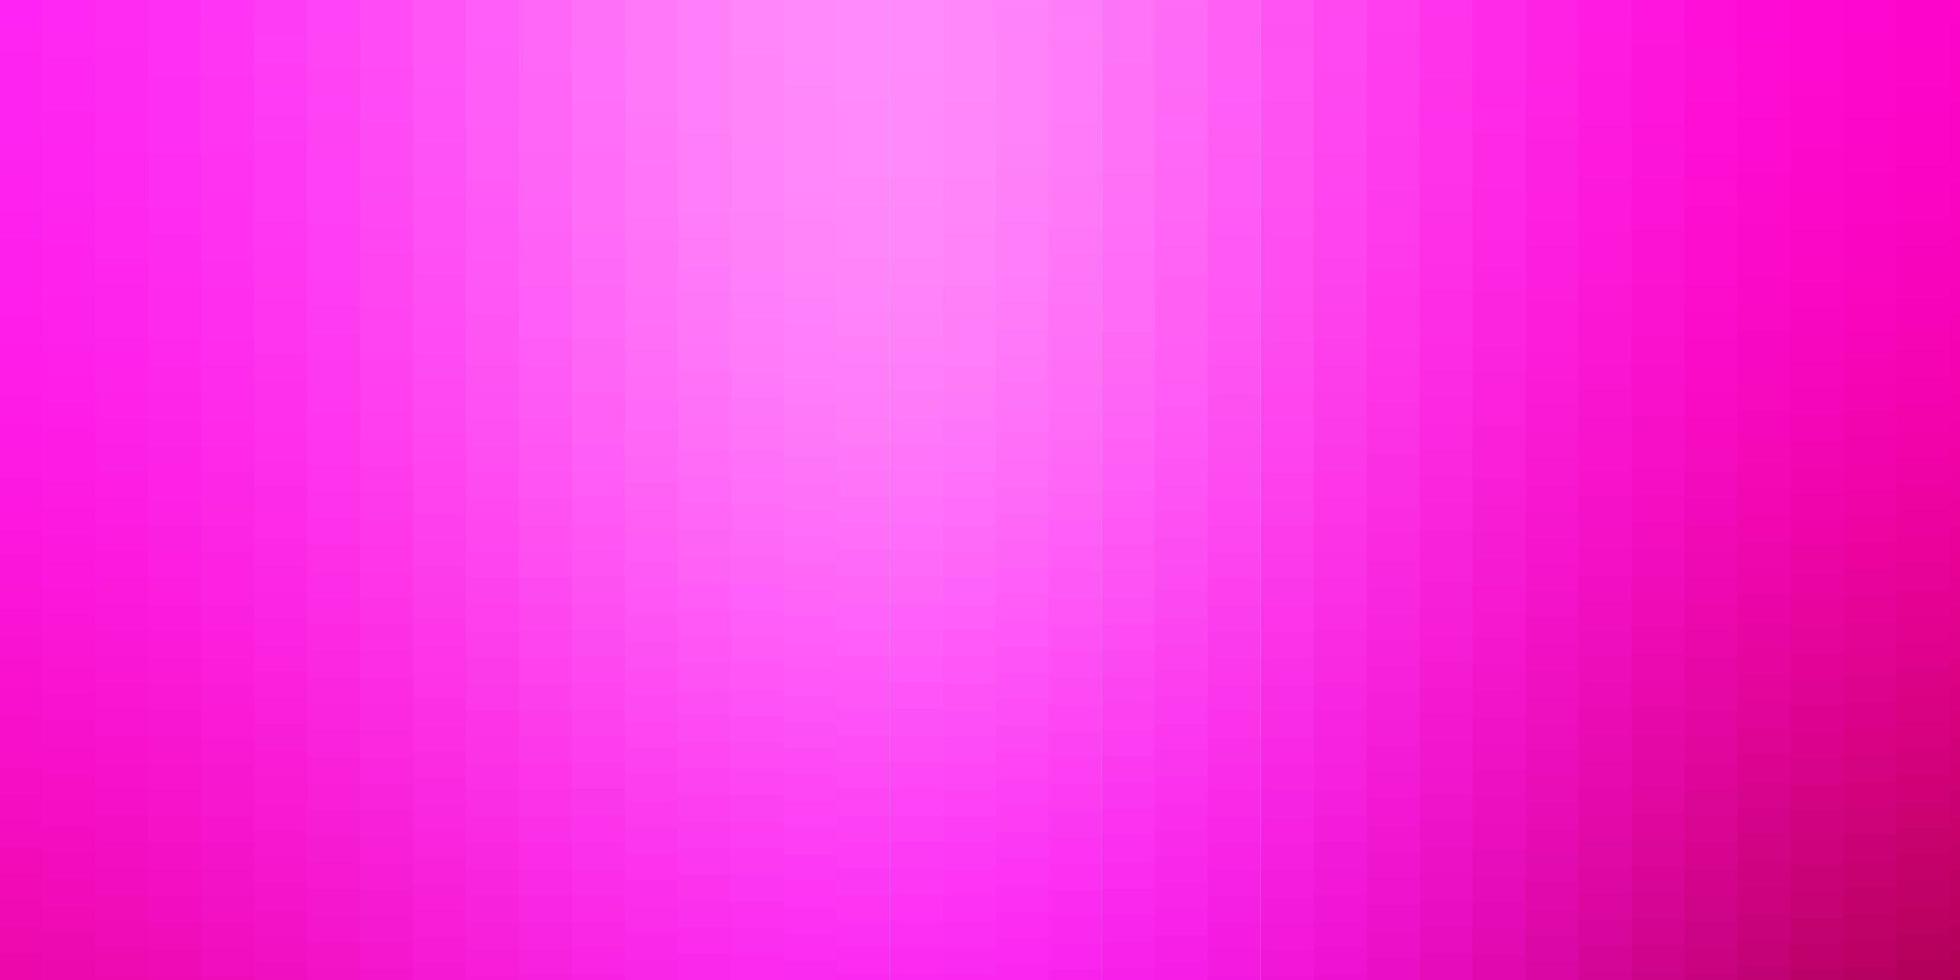 textura rosa em estilo retangular. vetor